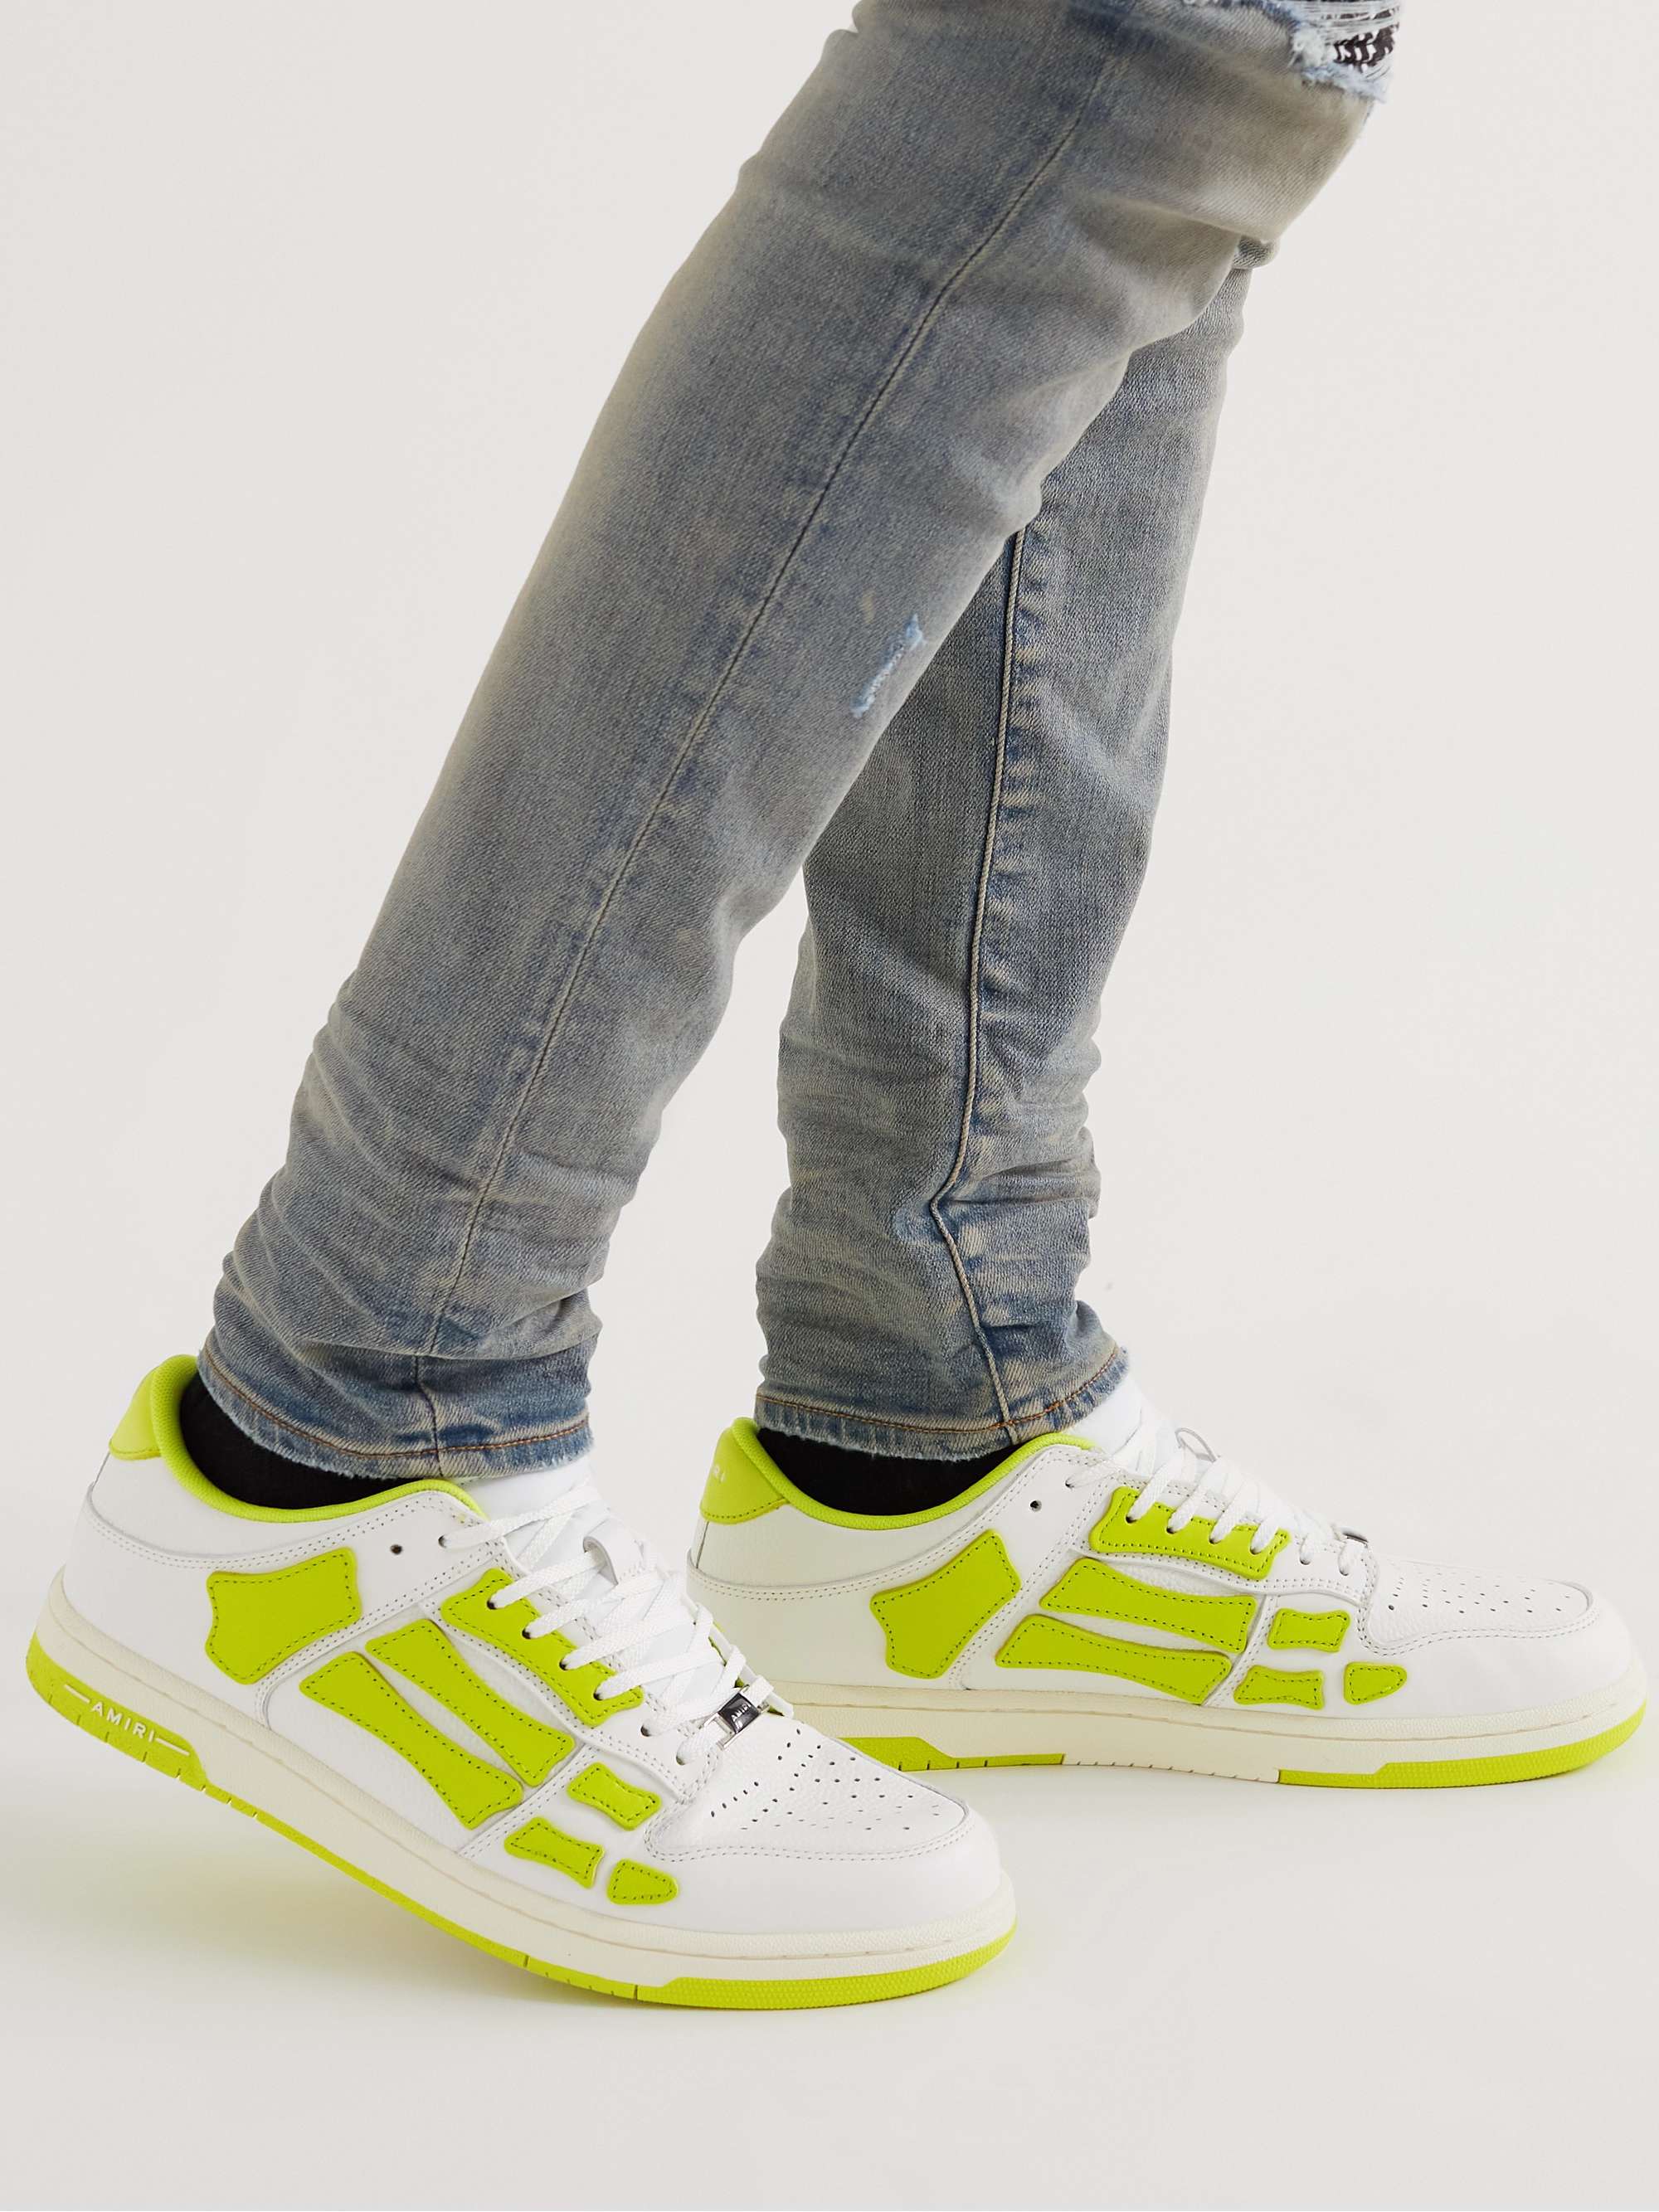 AMIRI Skel-Top Neon Colour-Block Leather Sneakers